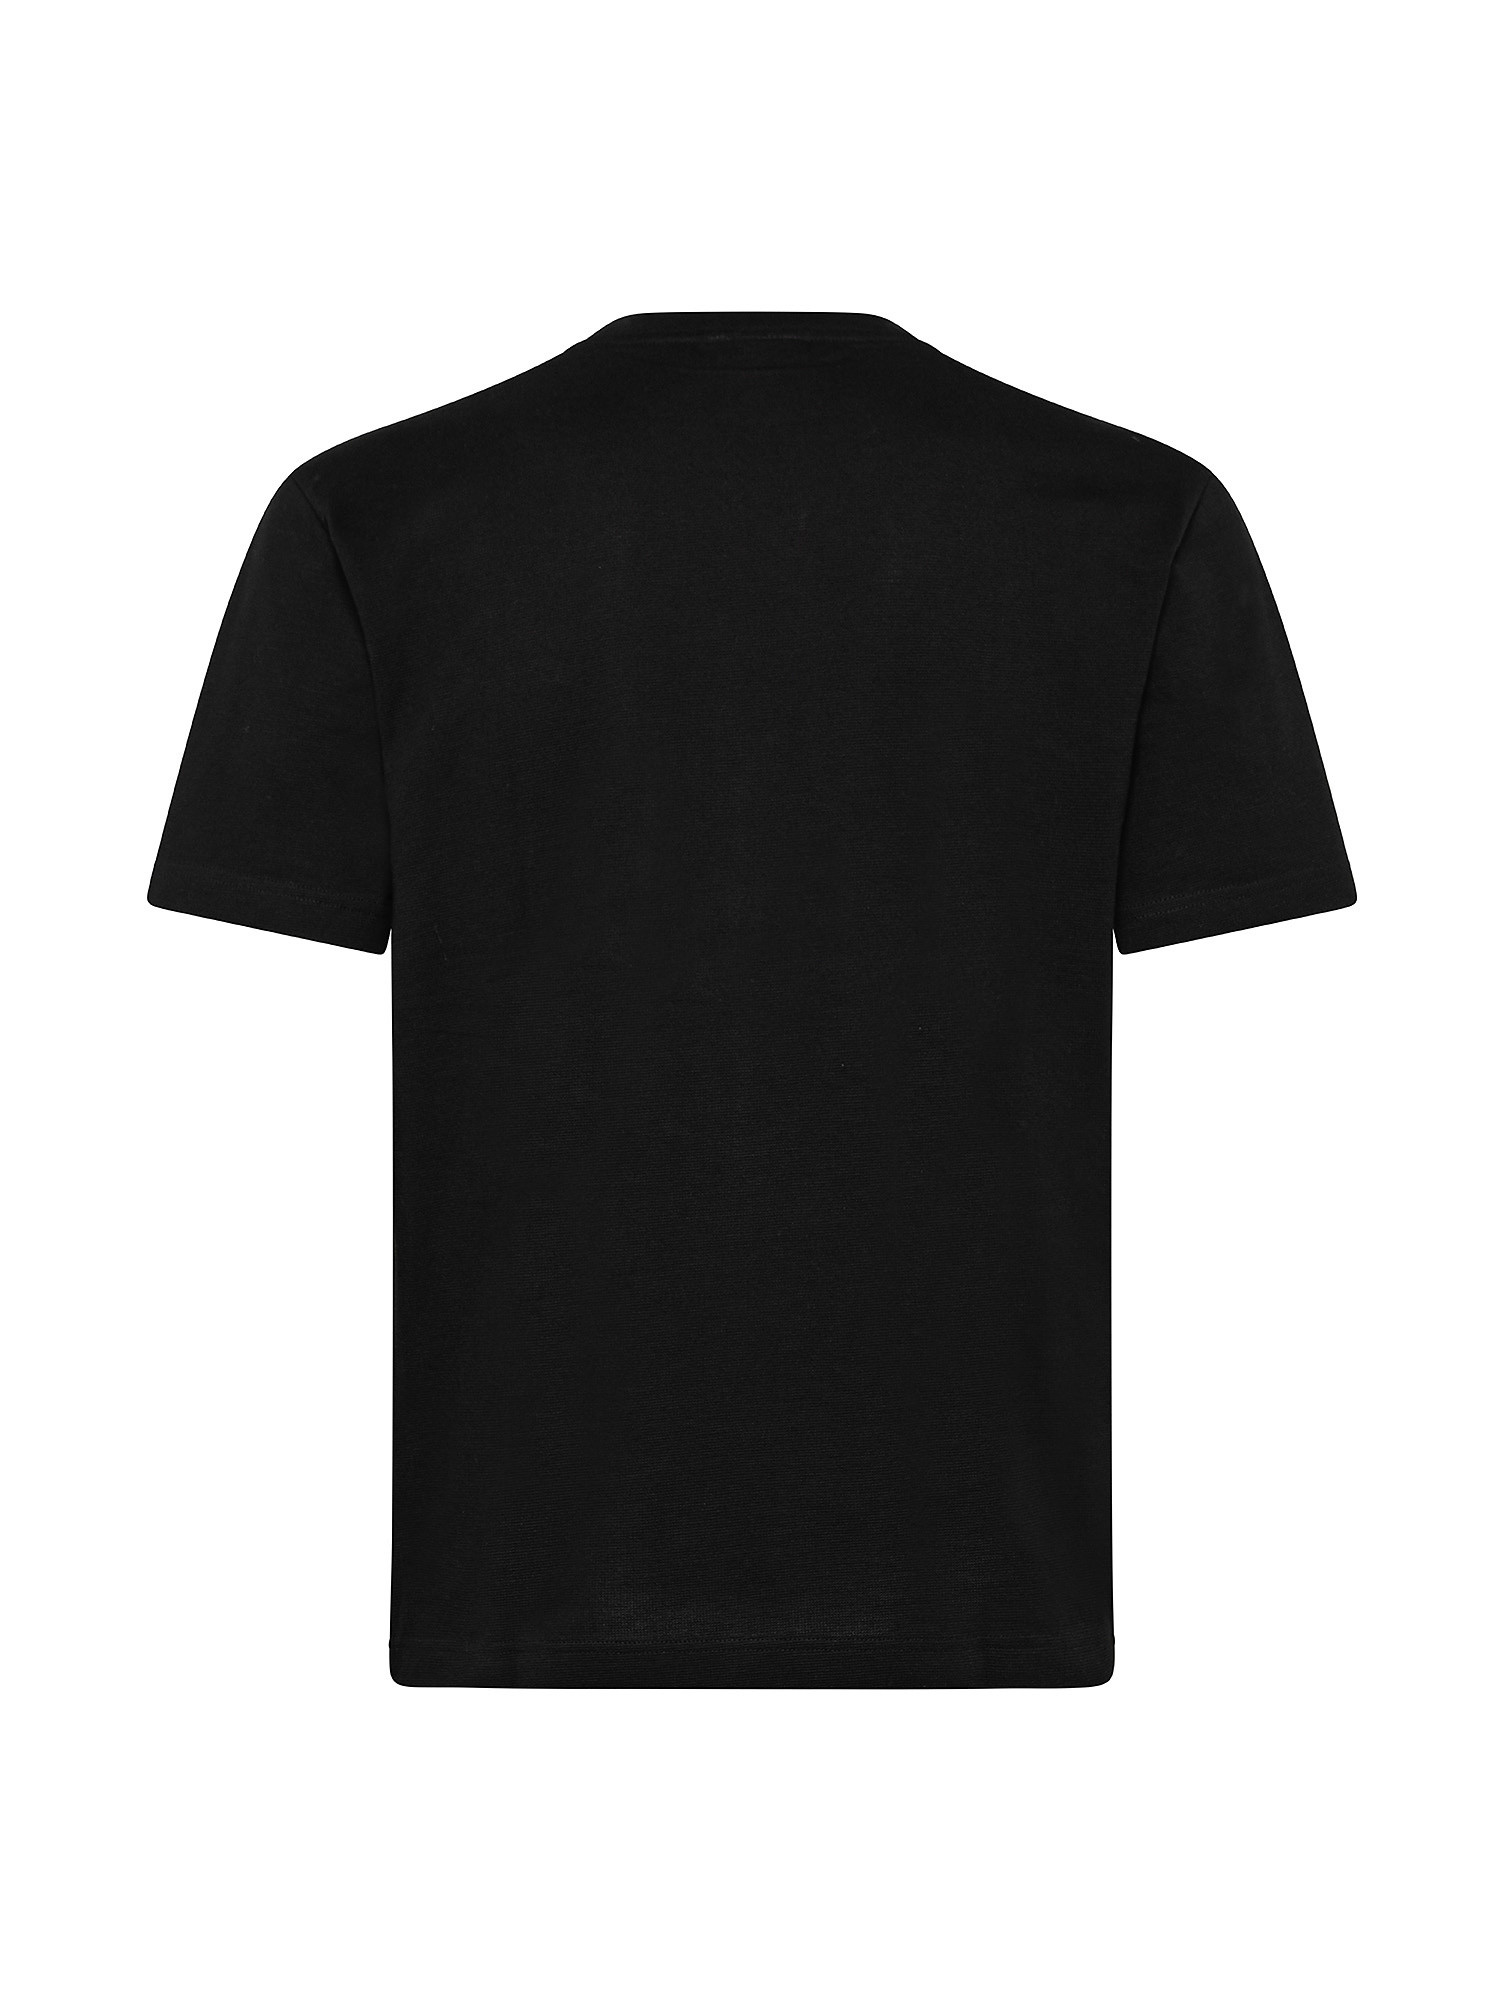 T-shirt, Nero, large image number 1